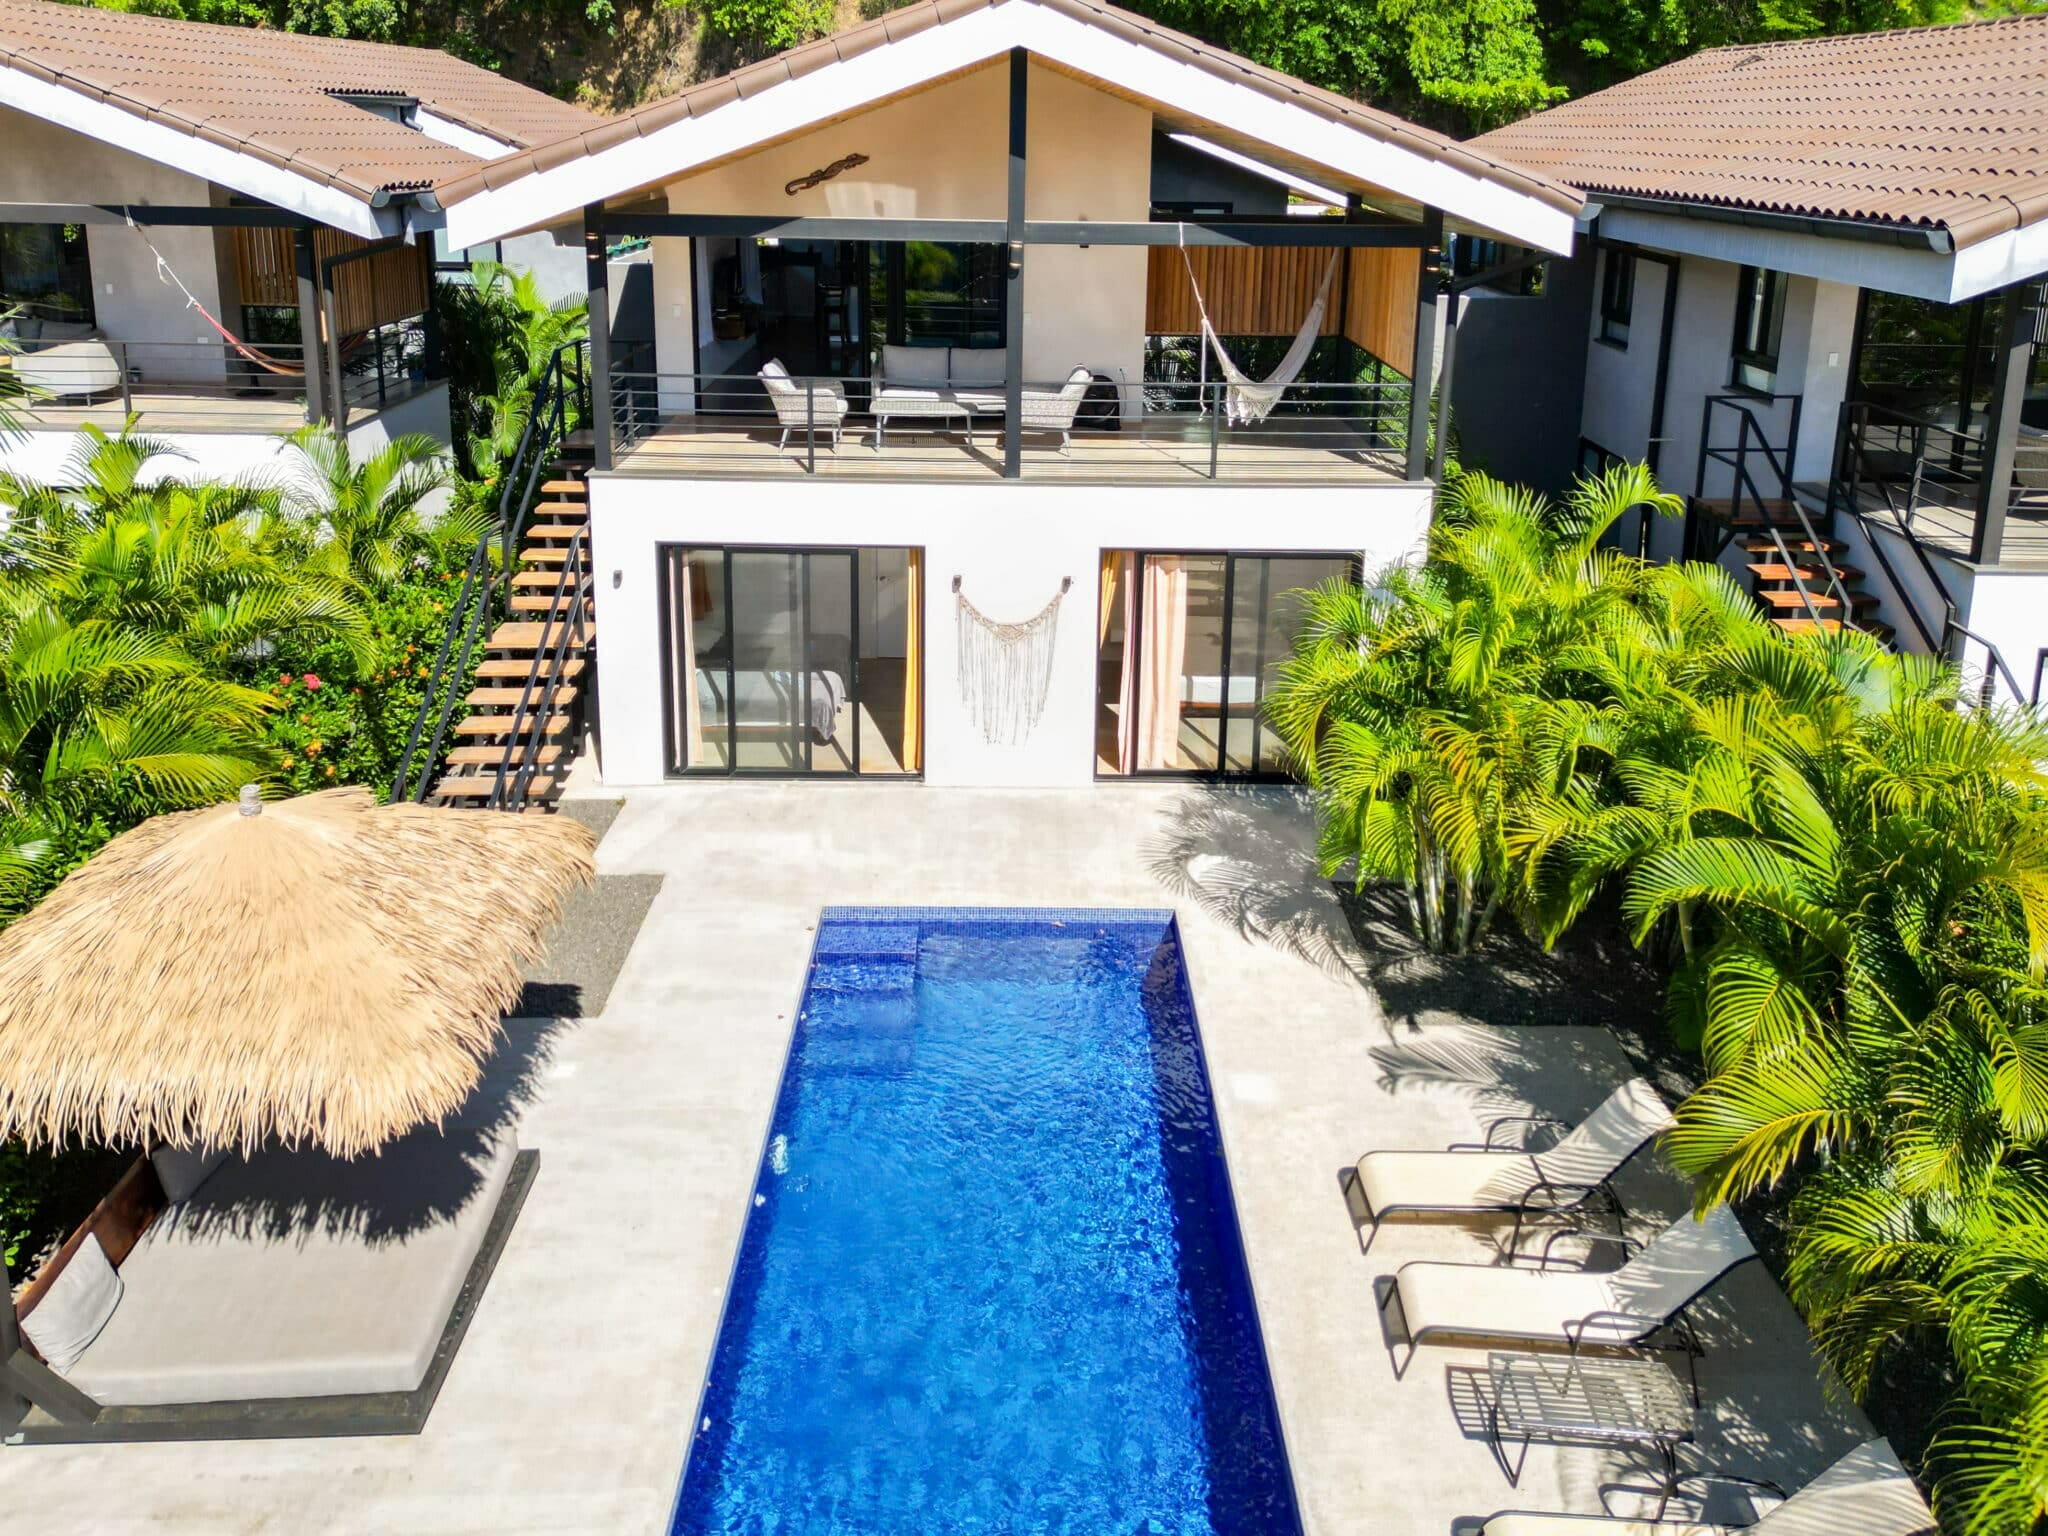 Casa Benedik: A Tamarindo Dream Home or Vacation Rental Investment Property